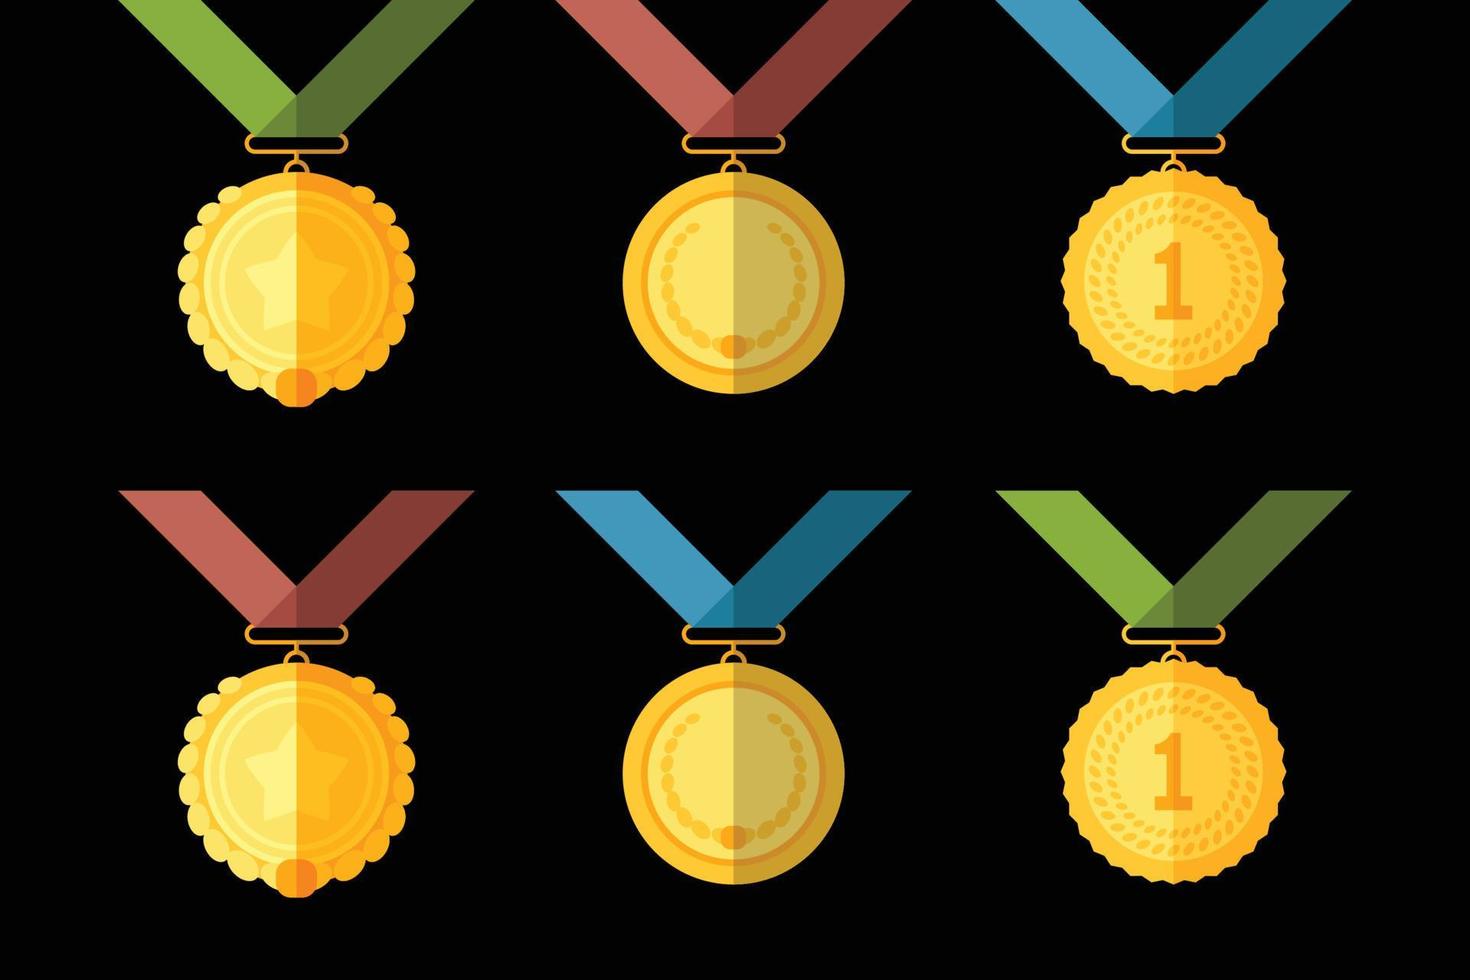 enkel illustration av gyllene tilldela medalj med band för vinnare platt stil vektor